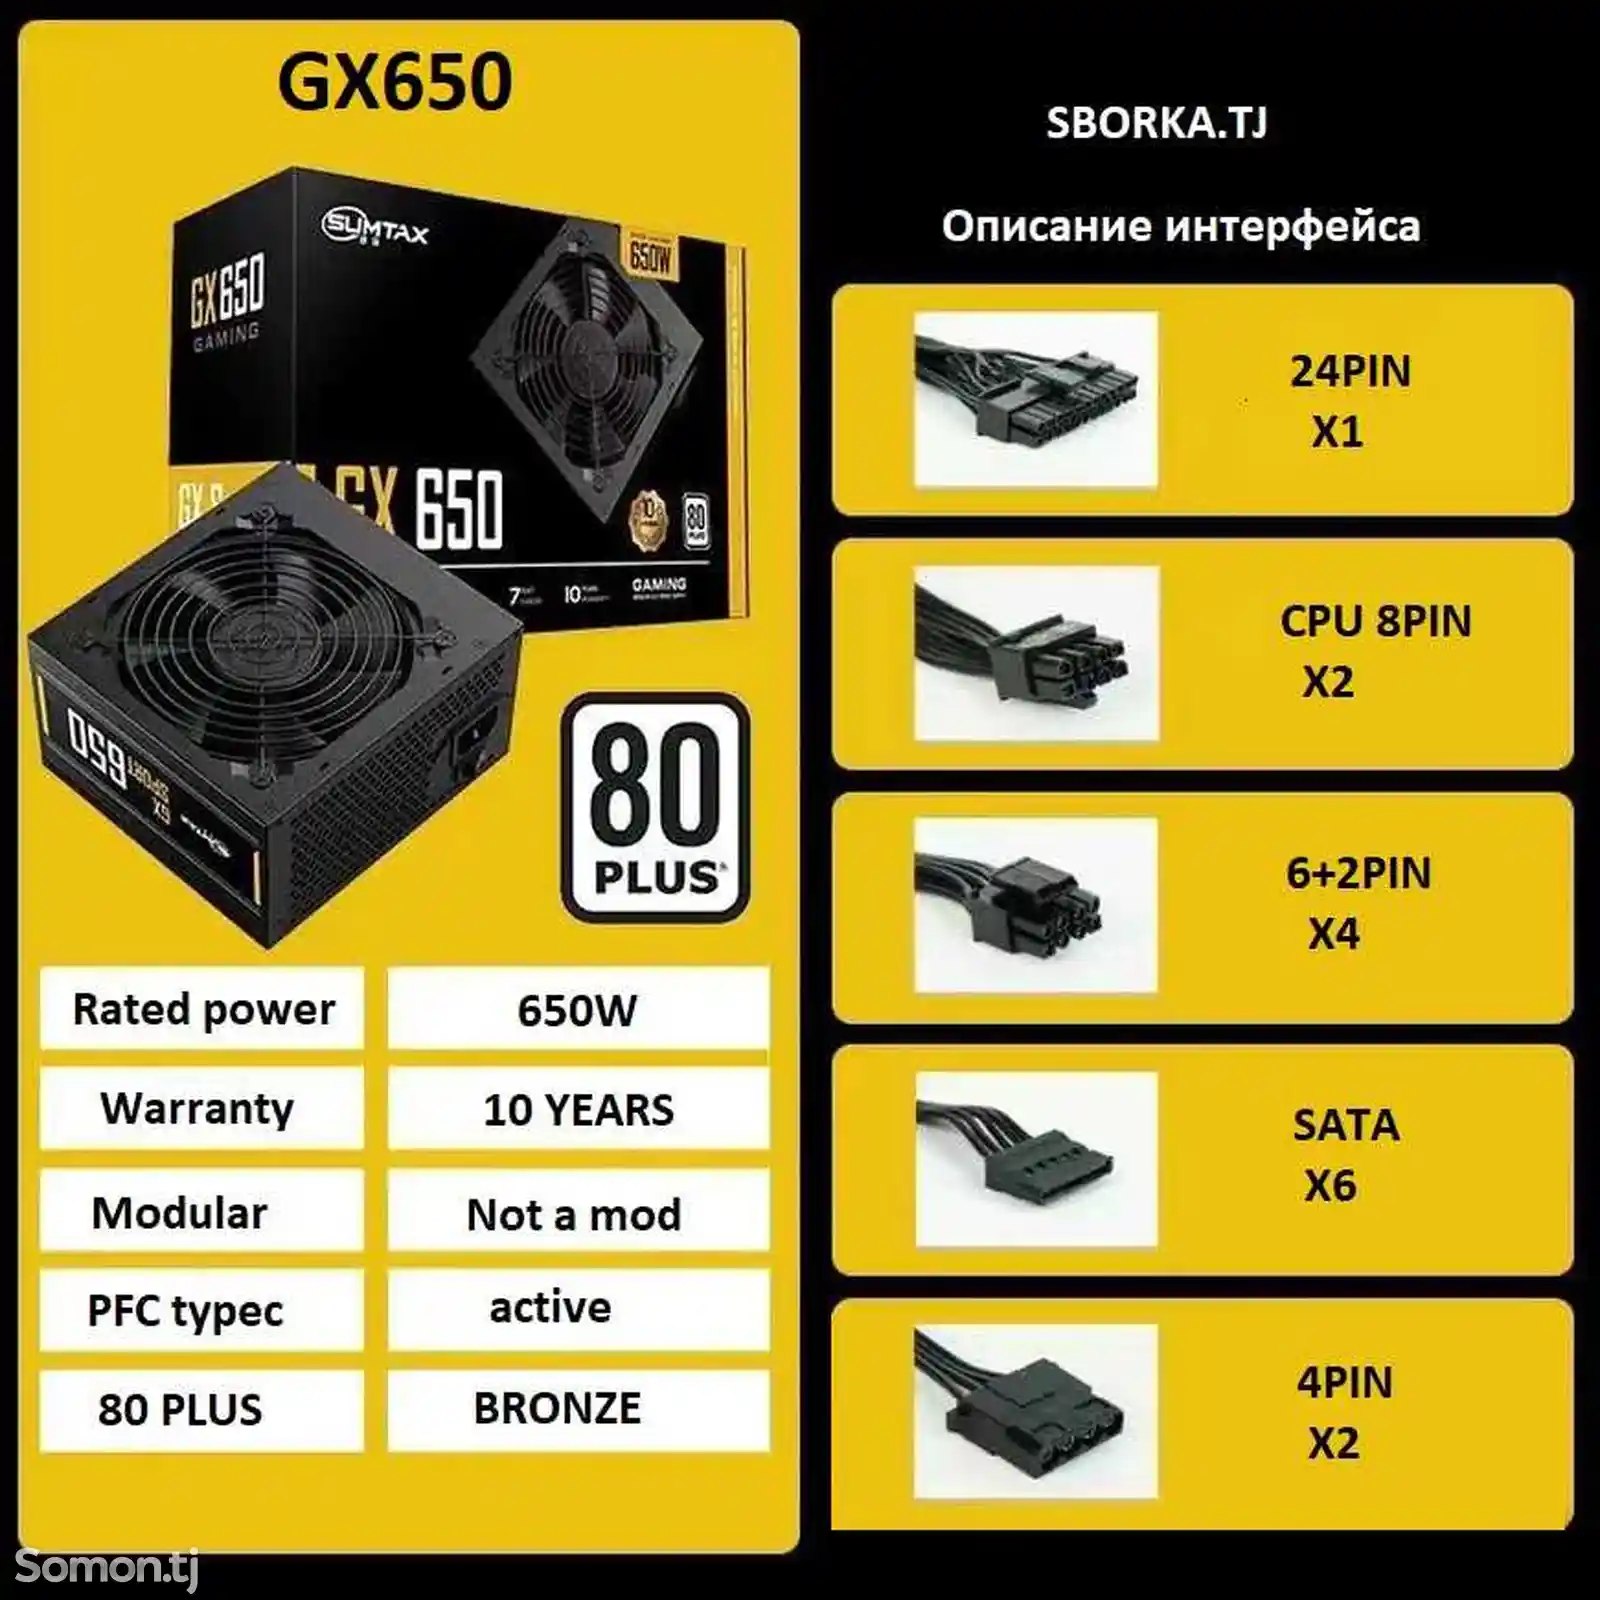 Блок питания Sumtax GX 650-2